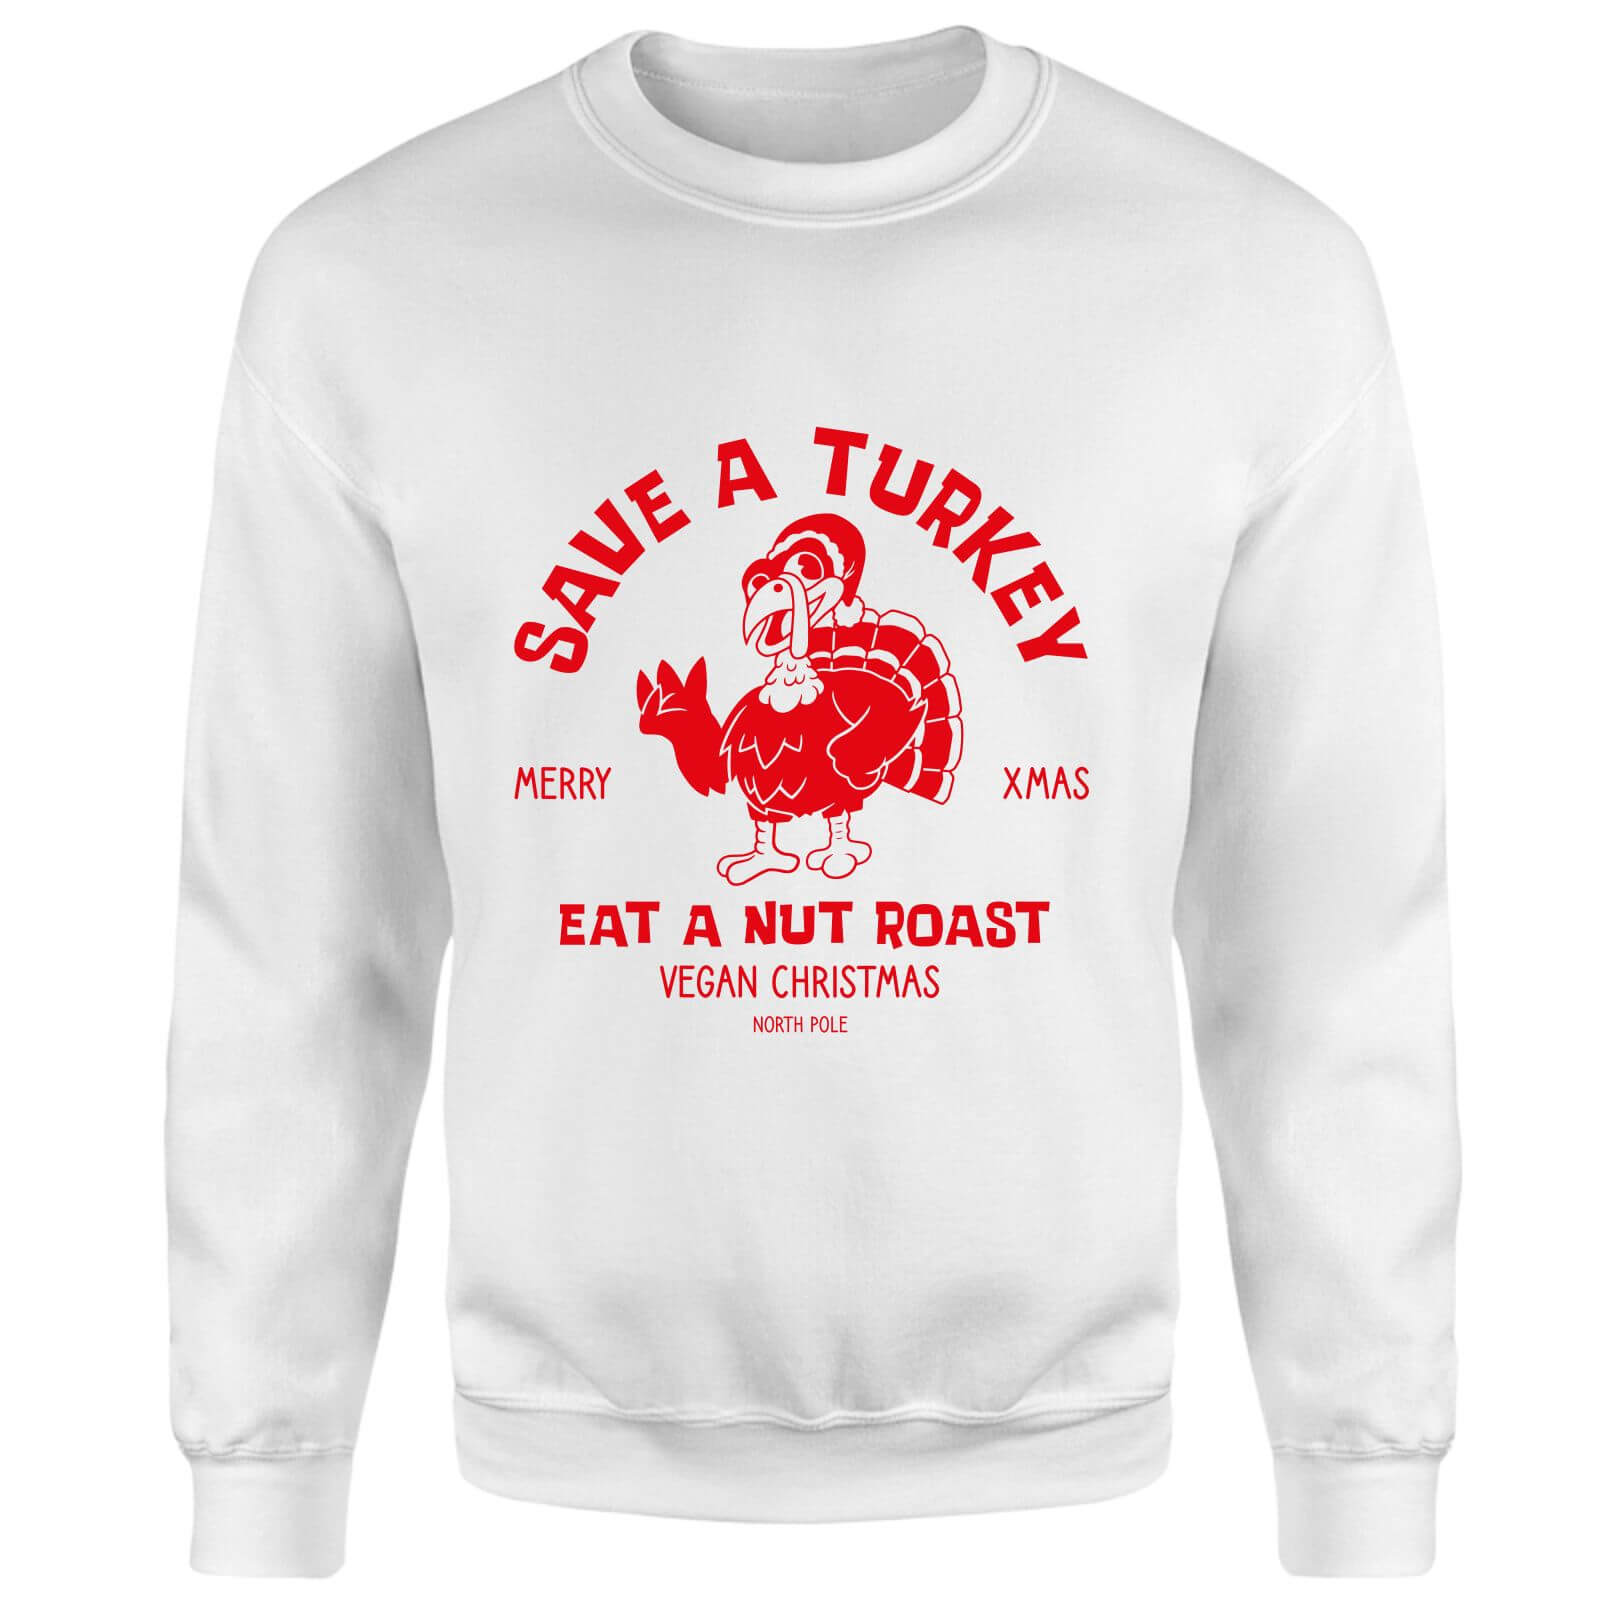 Save A Turkey Eat A Nut Roast Sweatshirt - White - XS - White